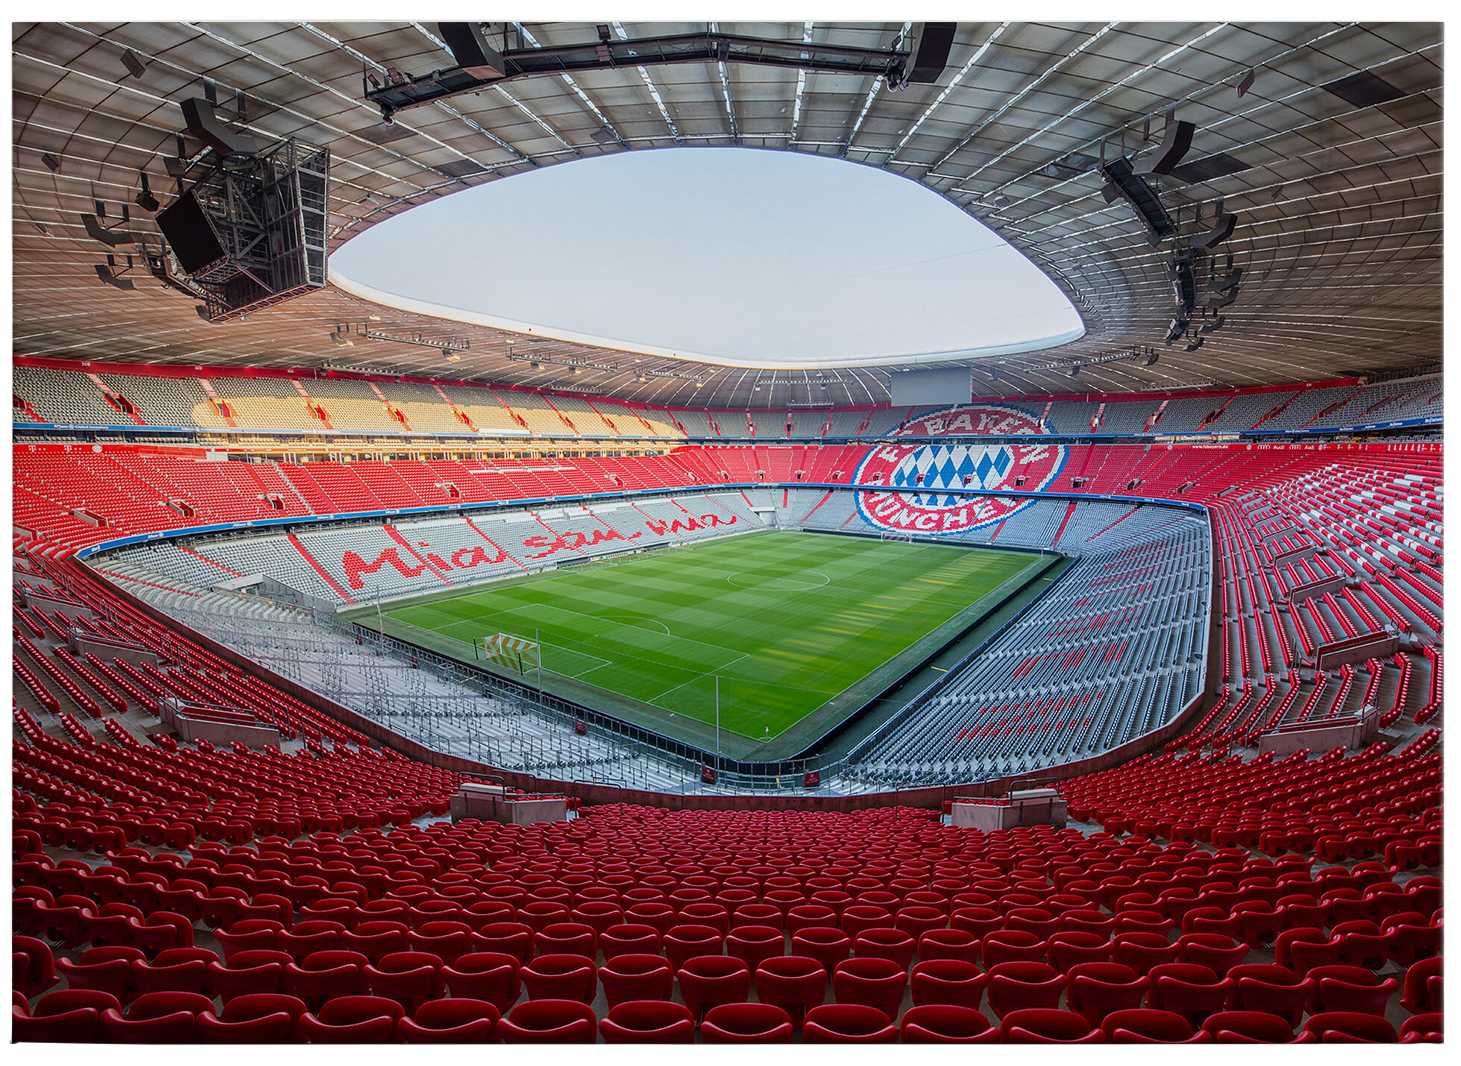             Tableau sur toile FC Bayern Stadion - 0,70 m x 0,50 m
        